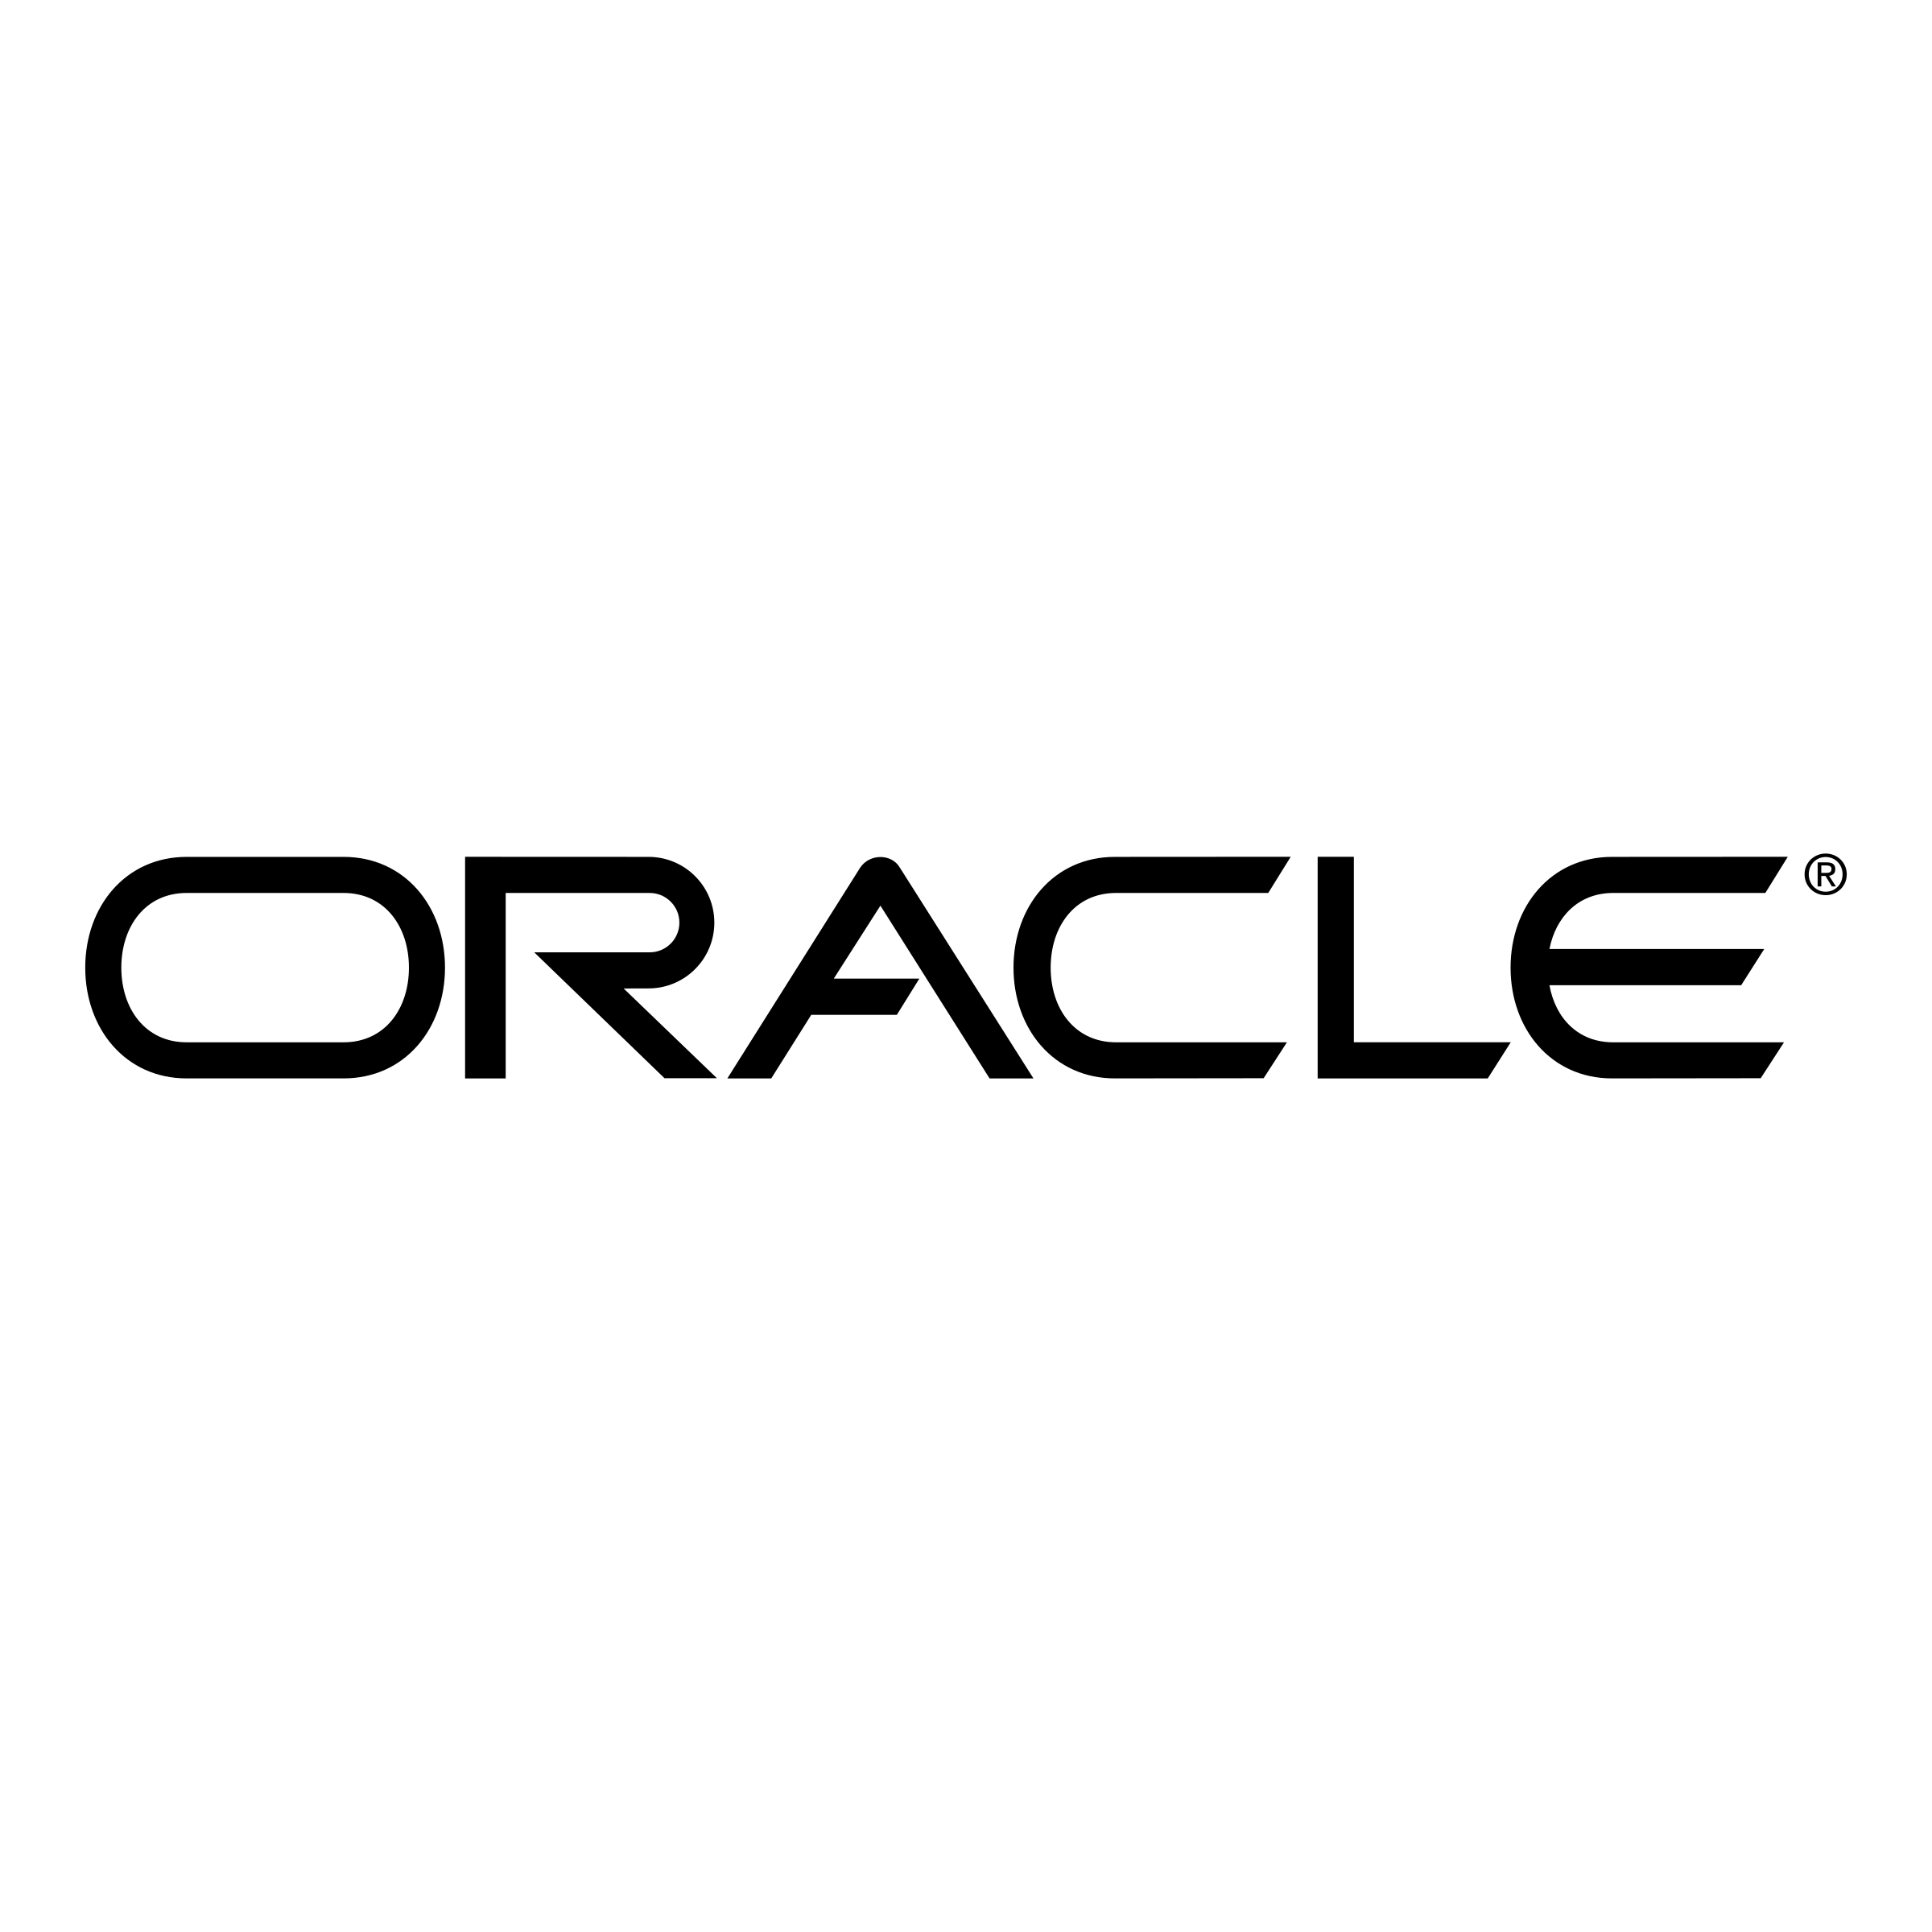 Black Oracle Logo - Oracle Logo PNG Transparent & SVG Vector